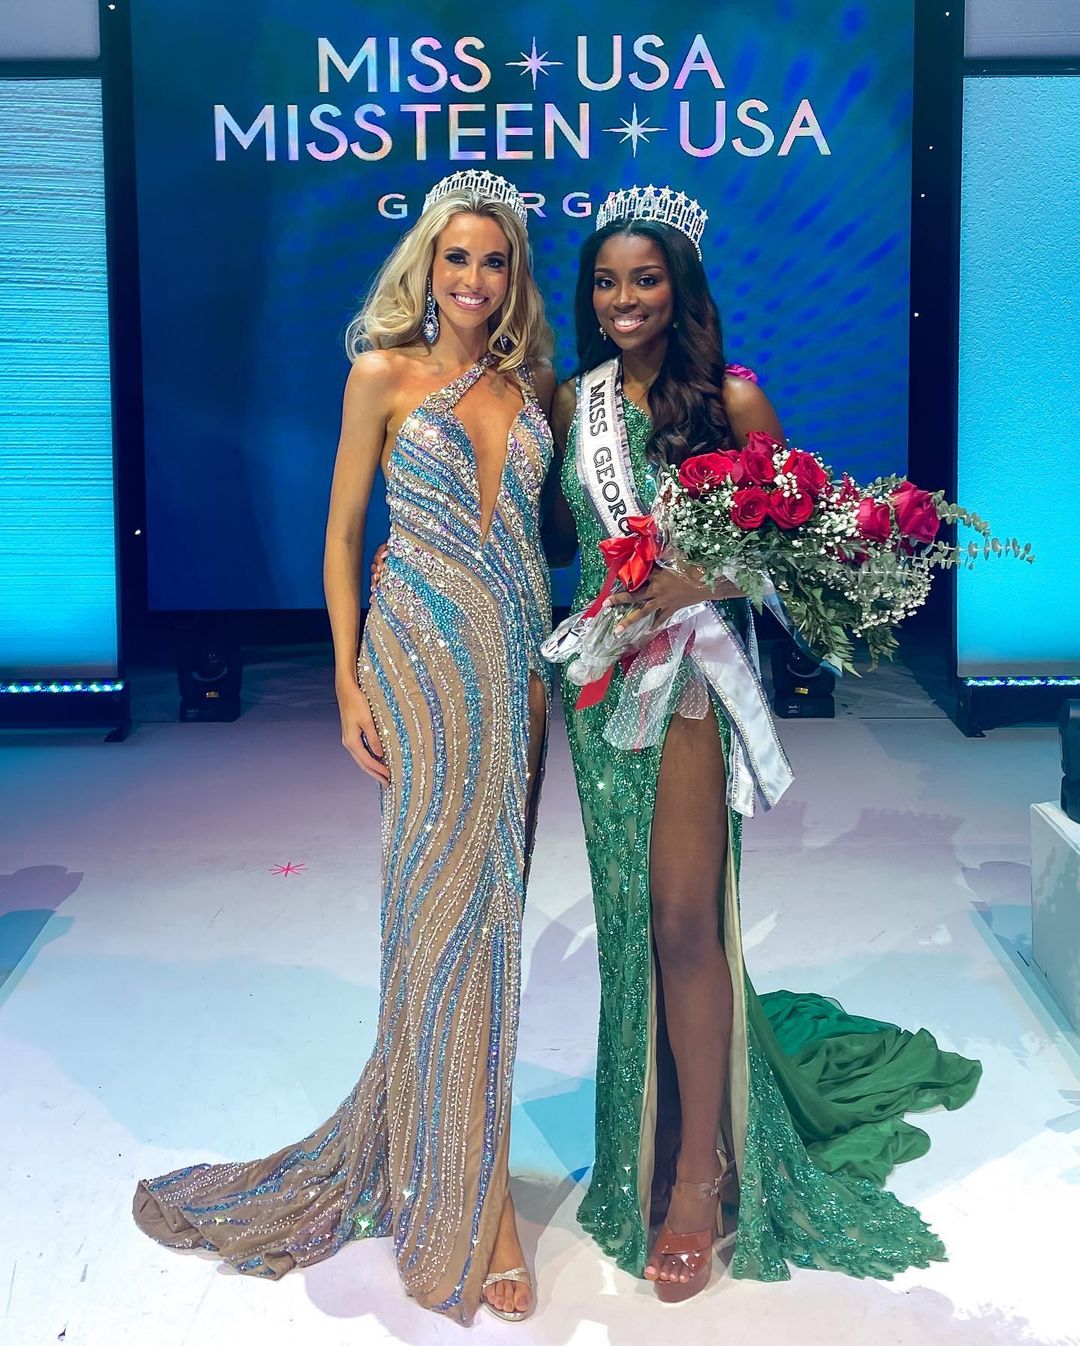 Miss Georgia USA 2023 Rachel Russaw with Miss GA USA 2022 Holly Haynes.